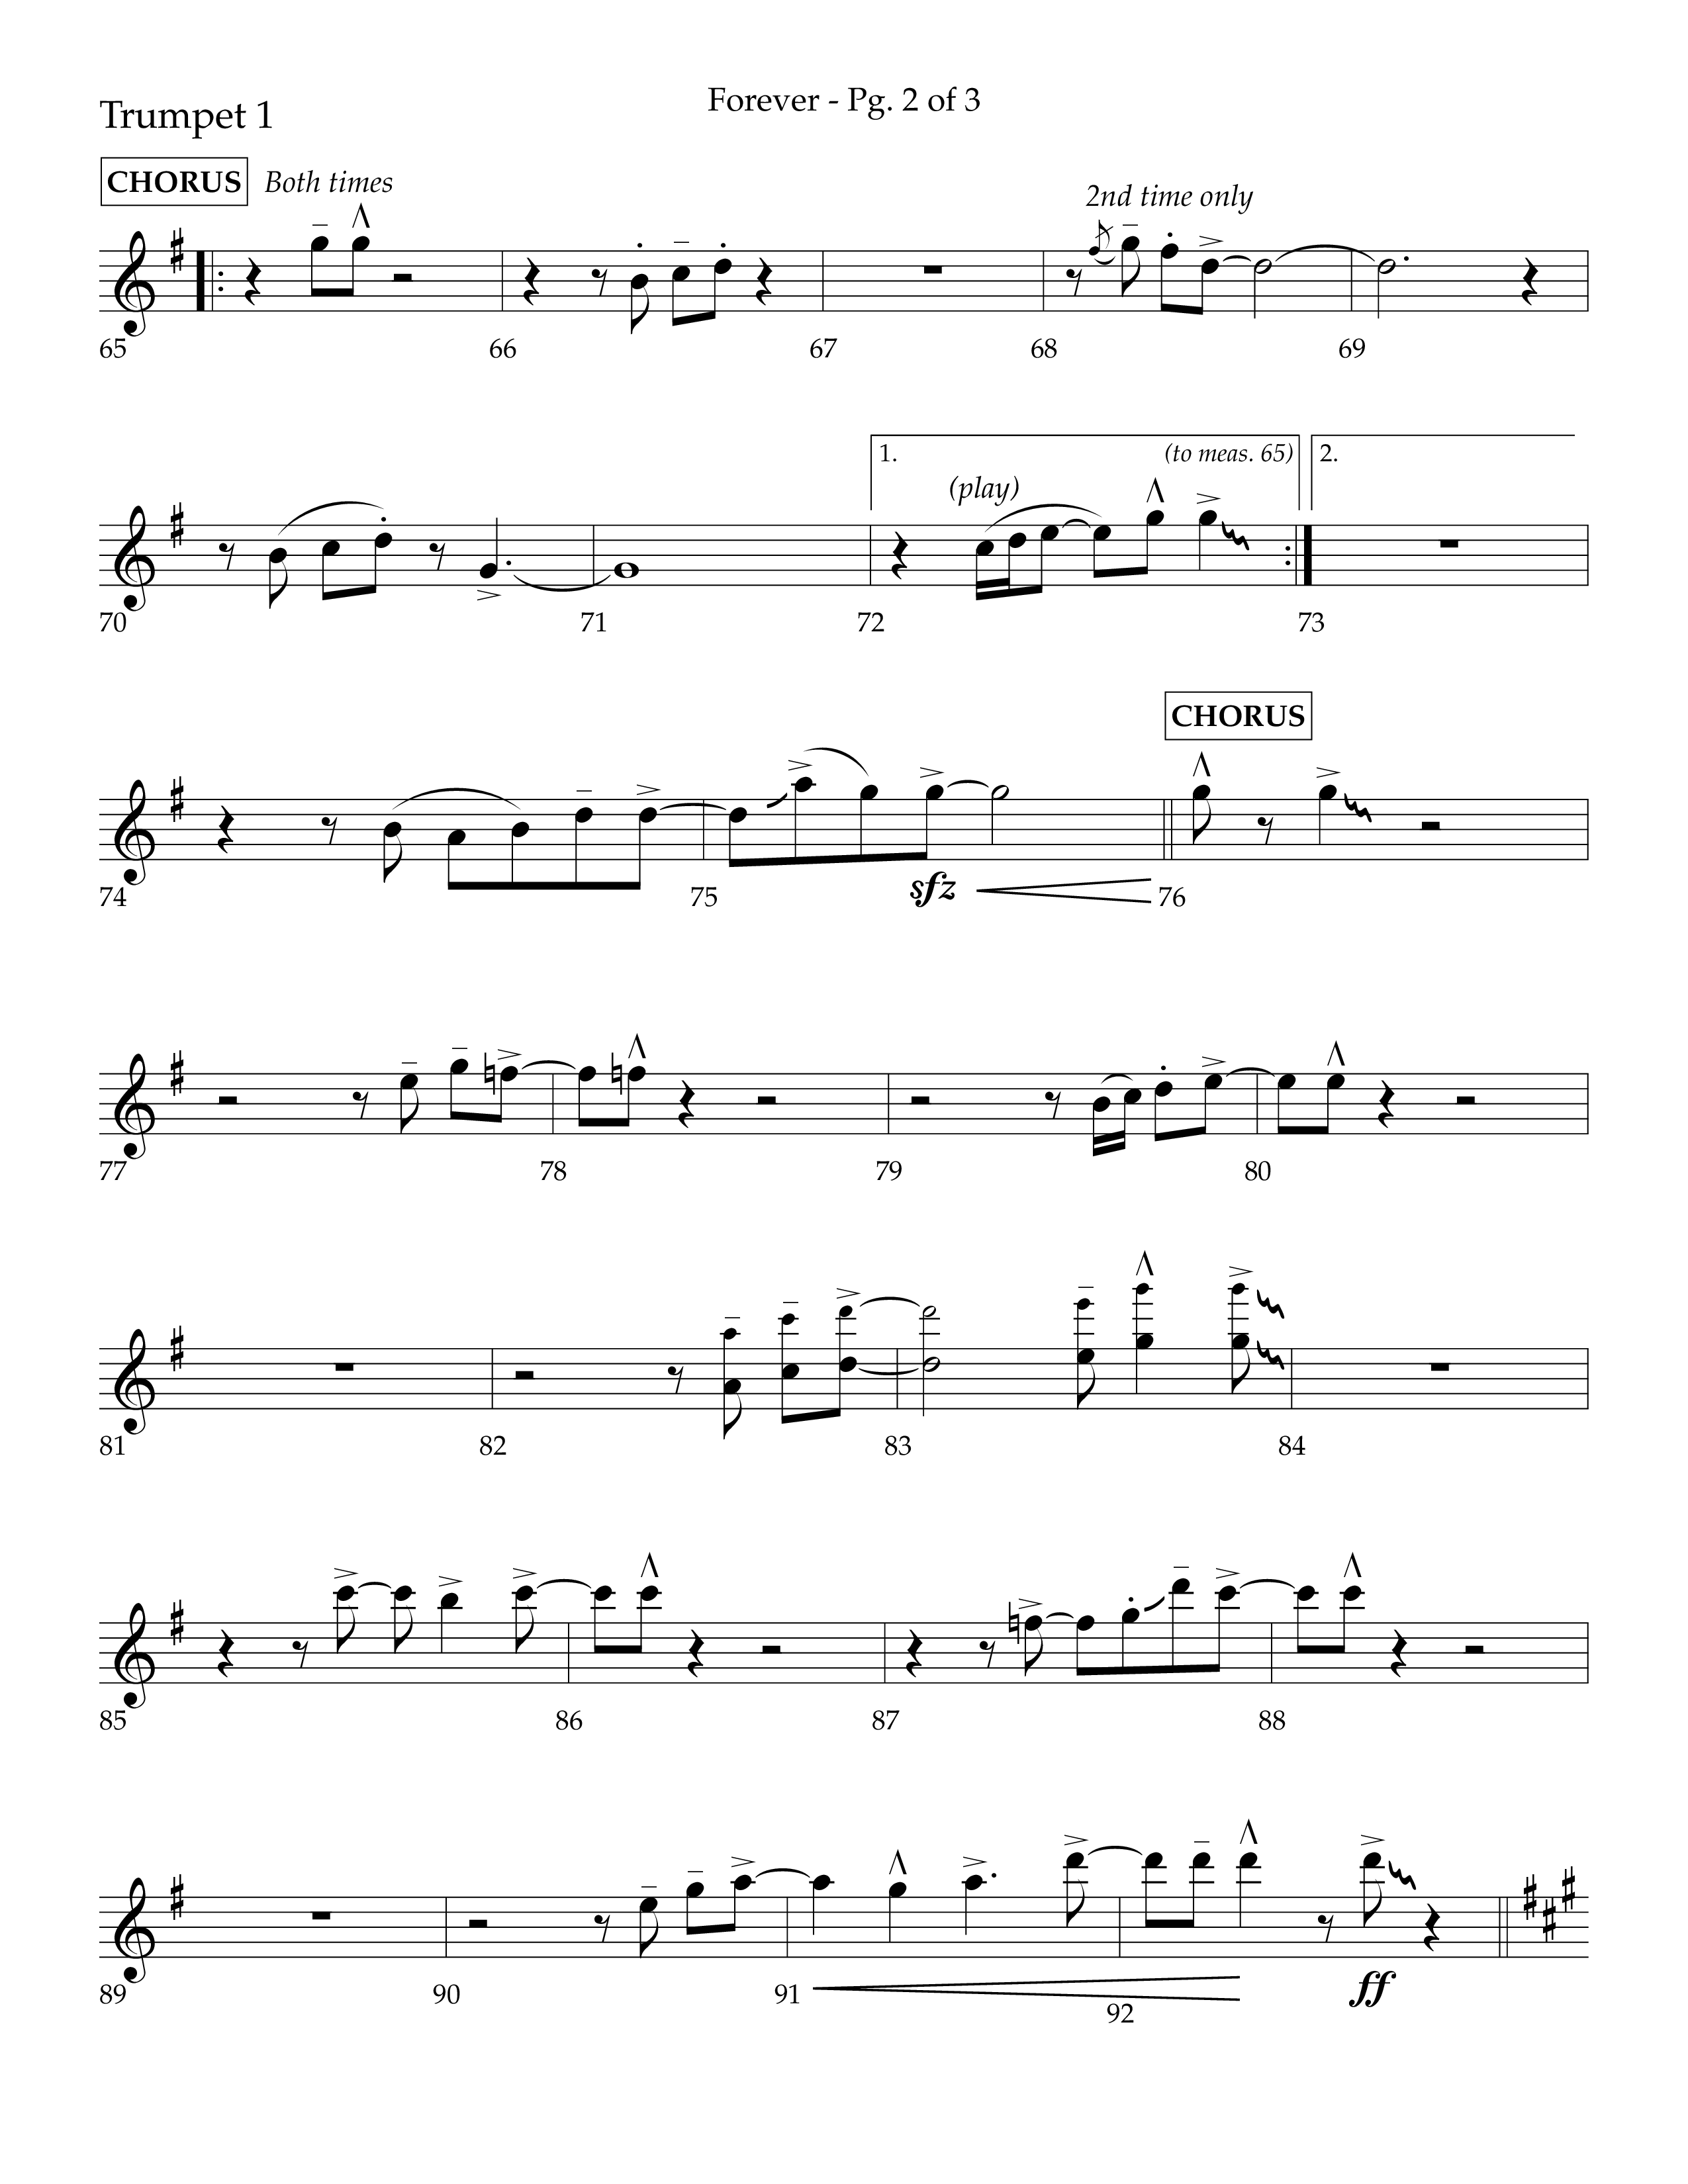 Forever (with Sing Praise) (Choral Anthem SATB) Trumpet 1 (Lifeway Choral / Arr. Danny Zaloudik)